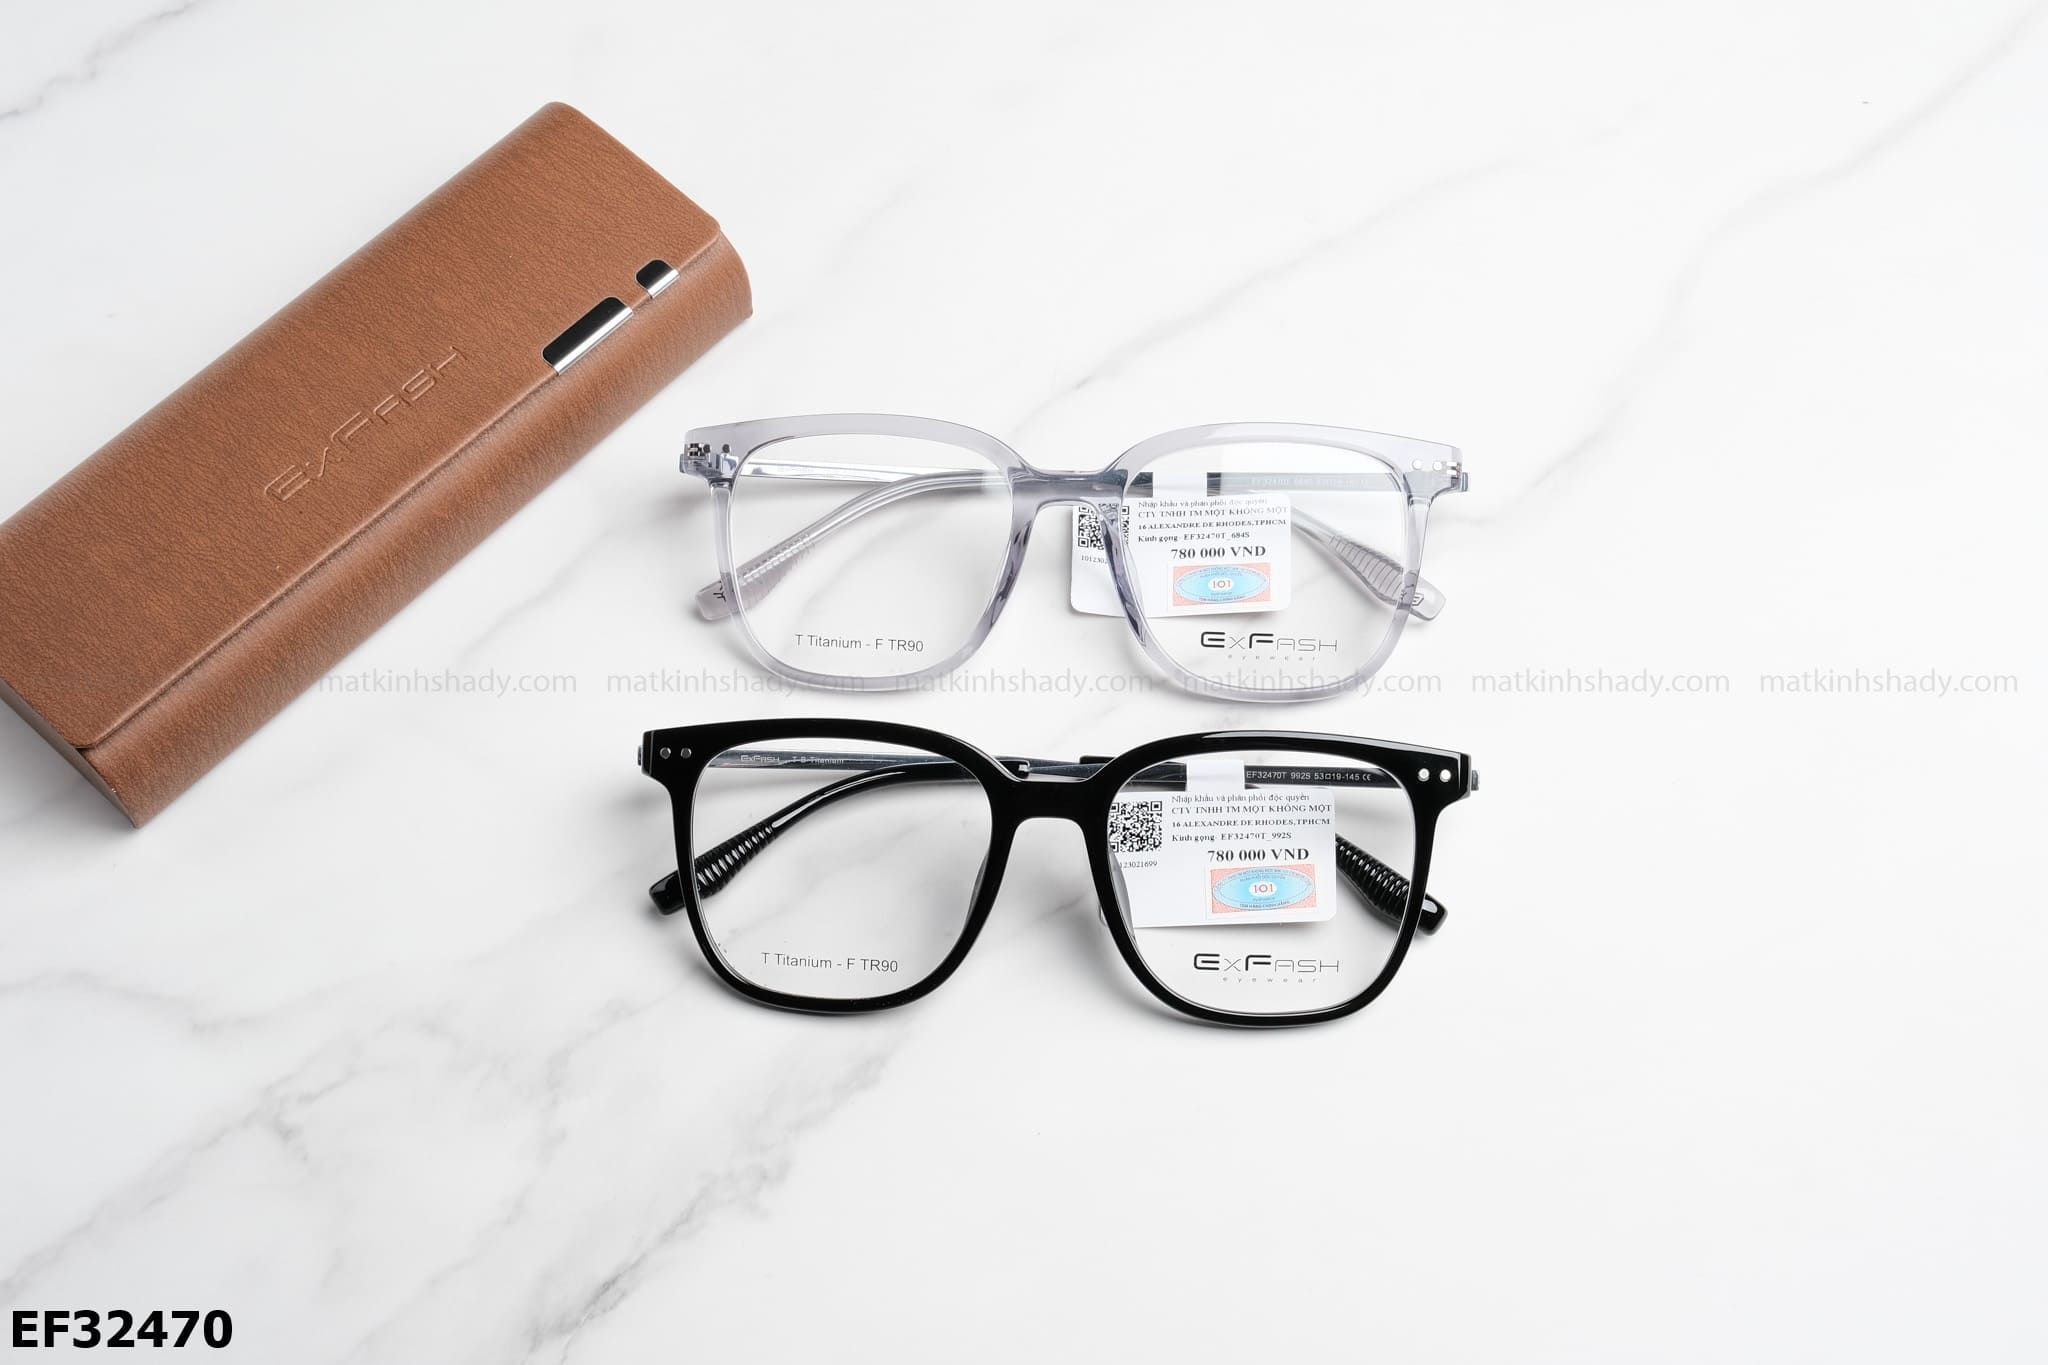  Exfash Eyewear - Glasses - EF32470 